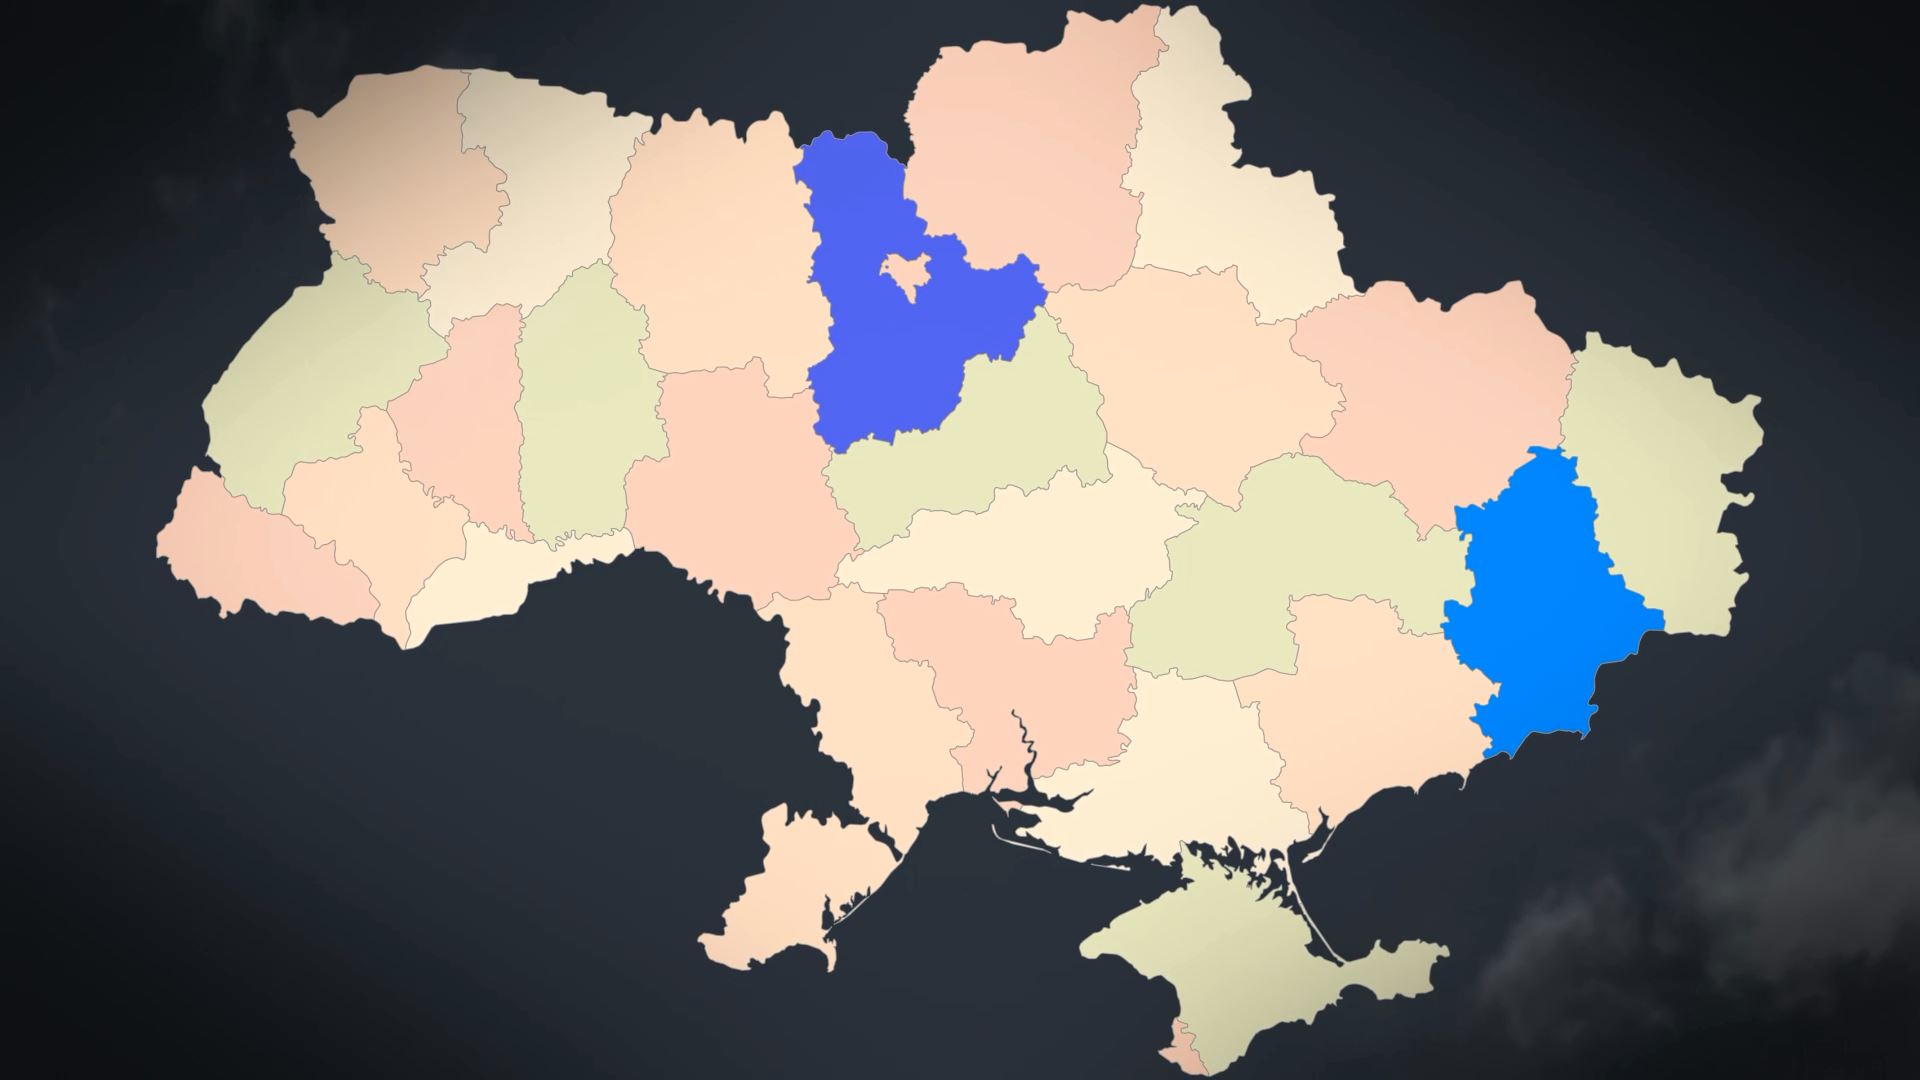  Ukraine Map - Ukraine UKR Map Kit 